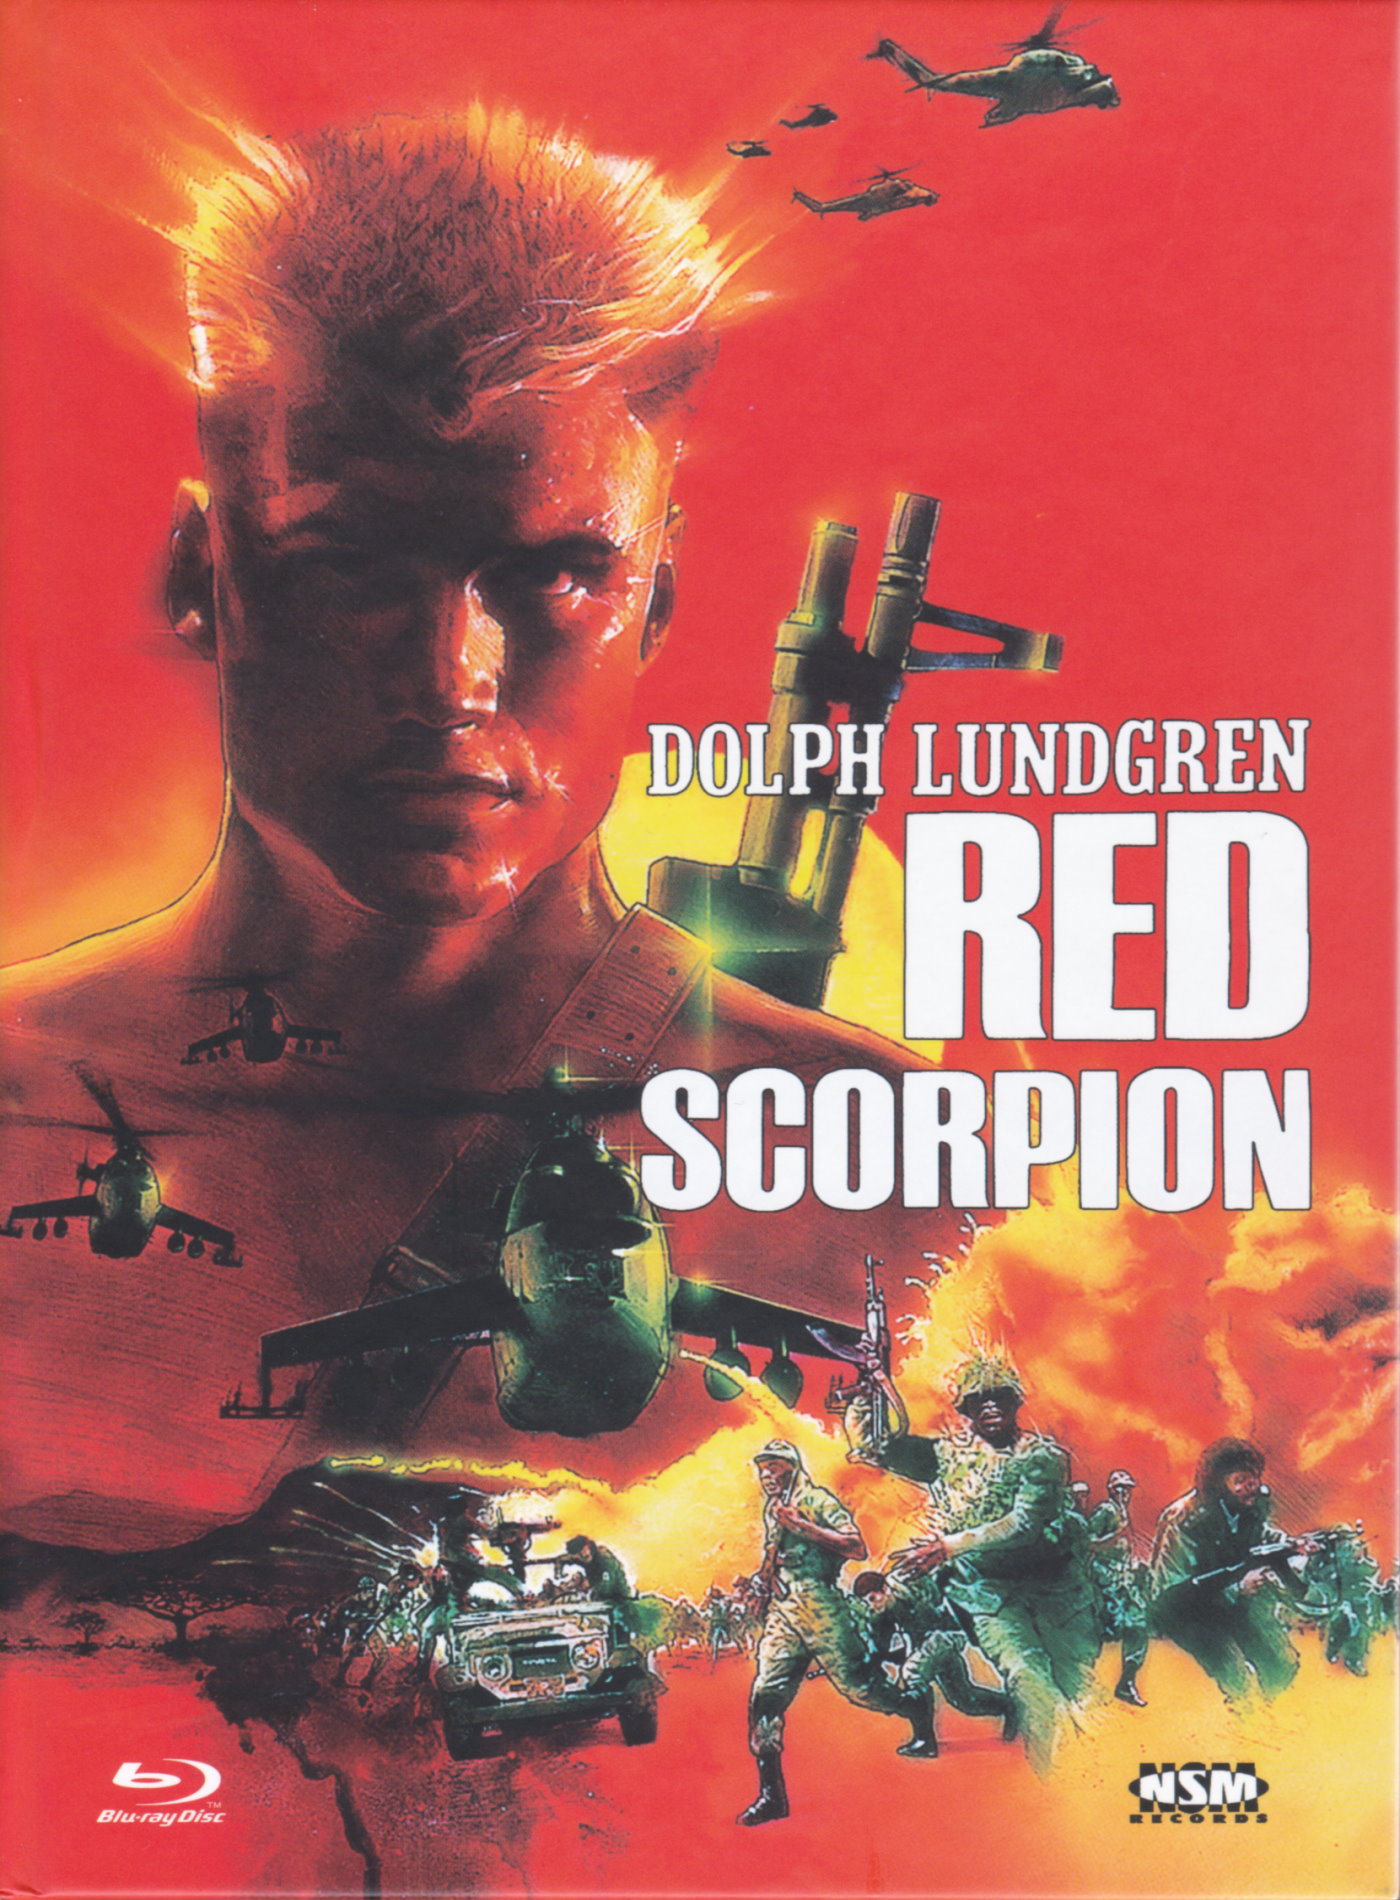 Cover - Red Scorpion.jpg